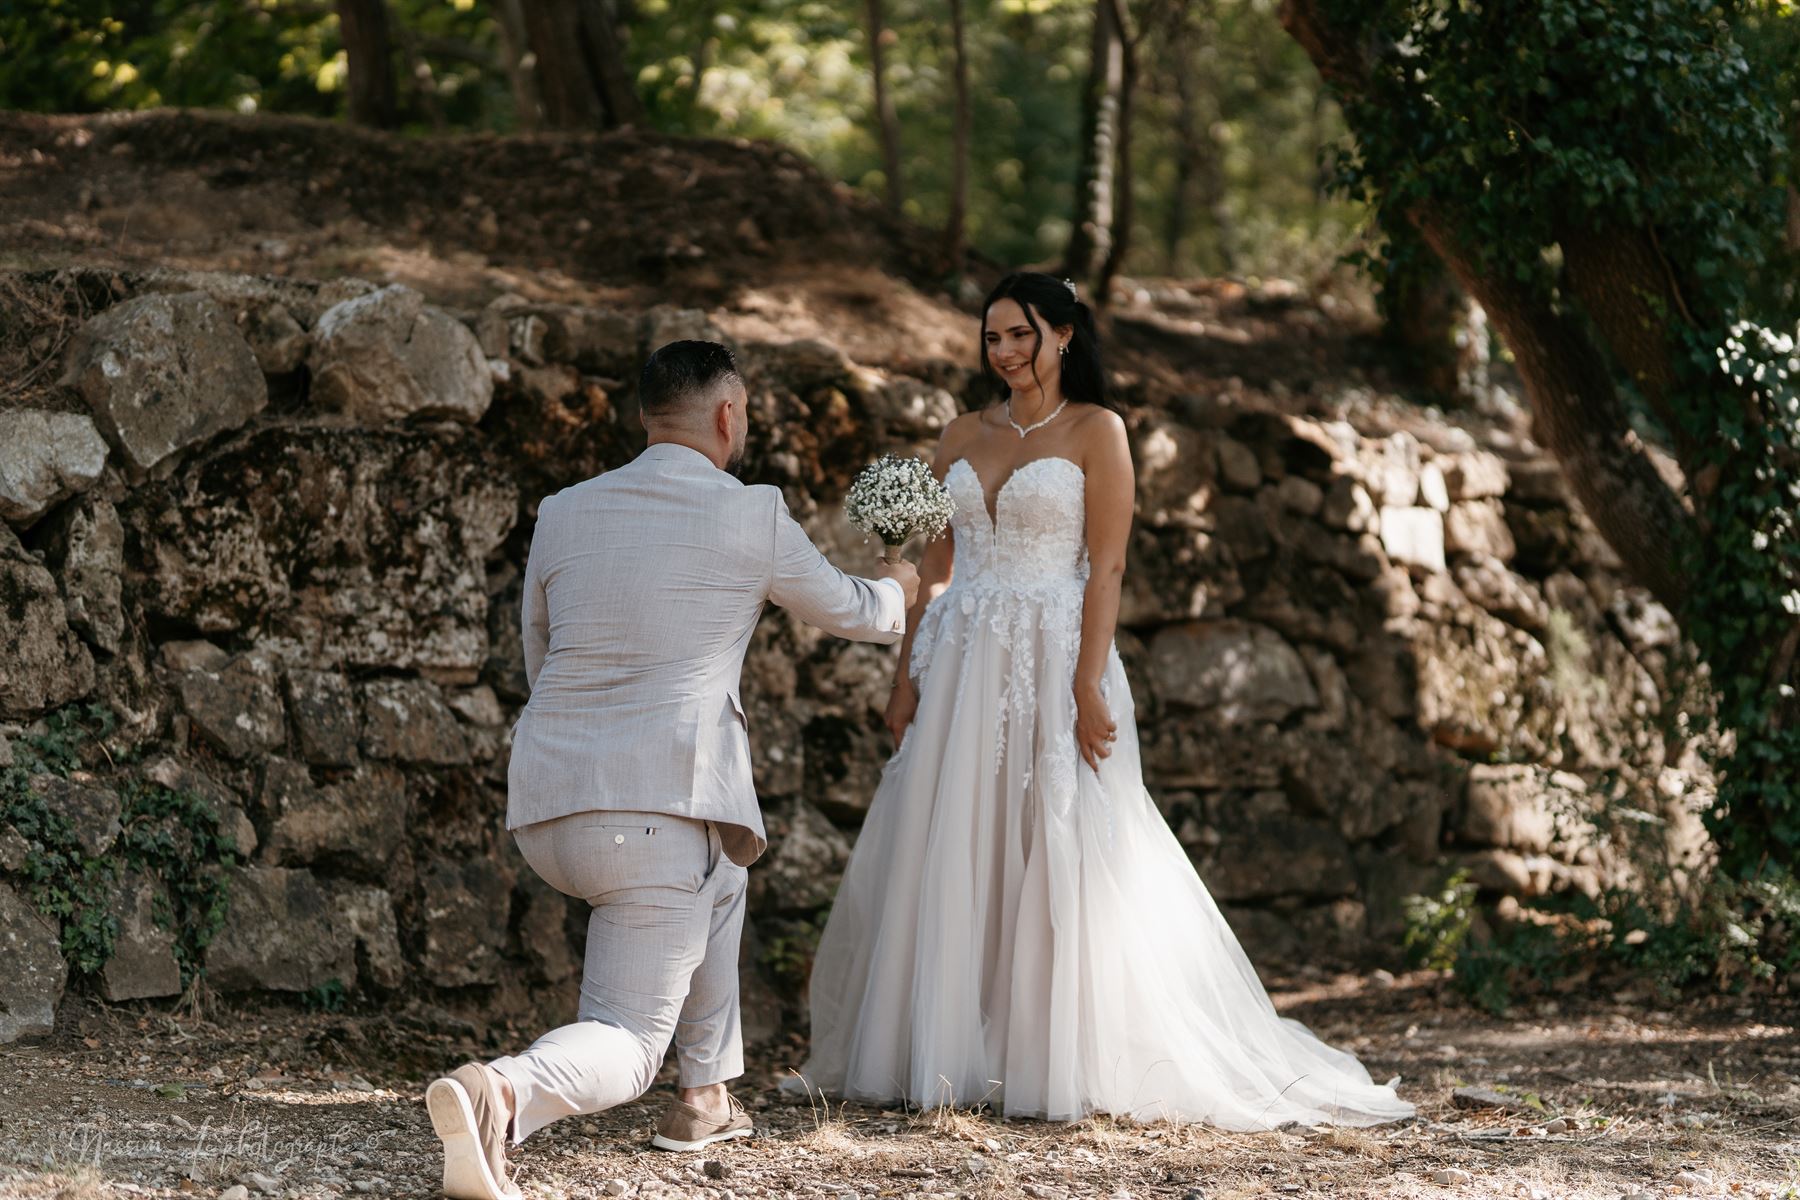 Wedding Photographer Aix en Provence: Capturing Love's Embrace 20